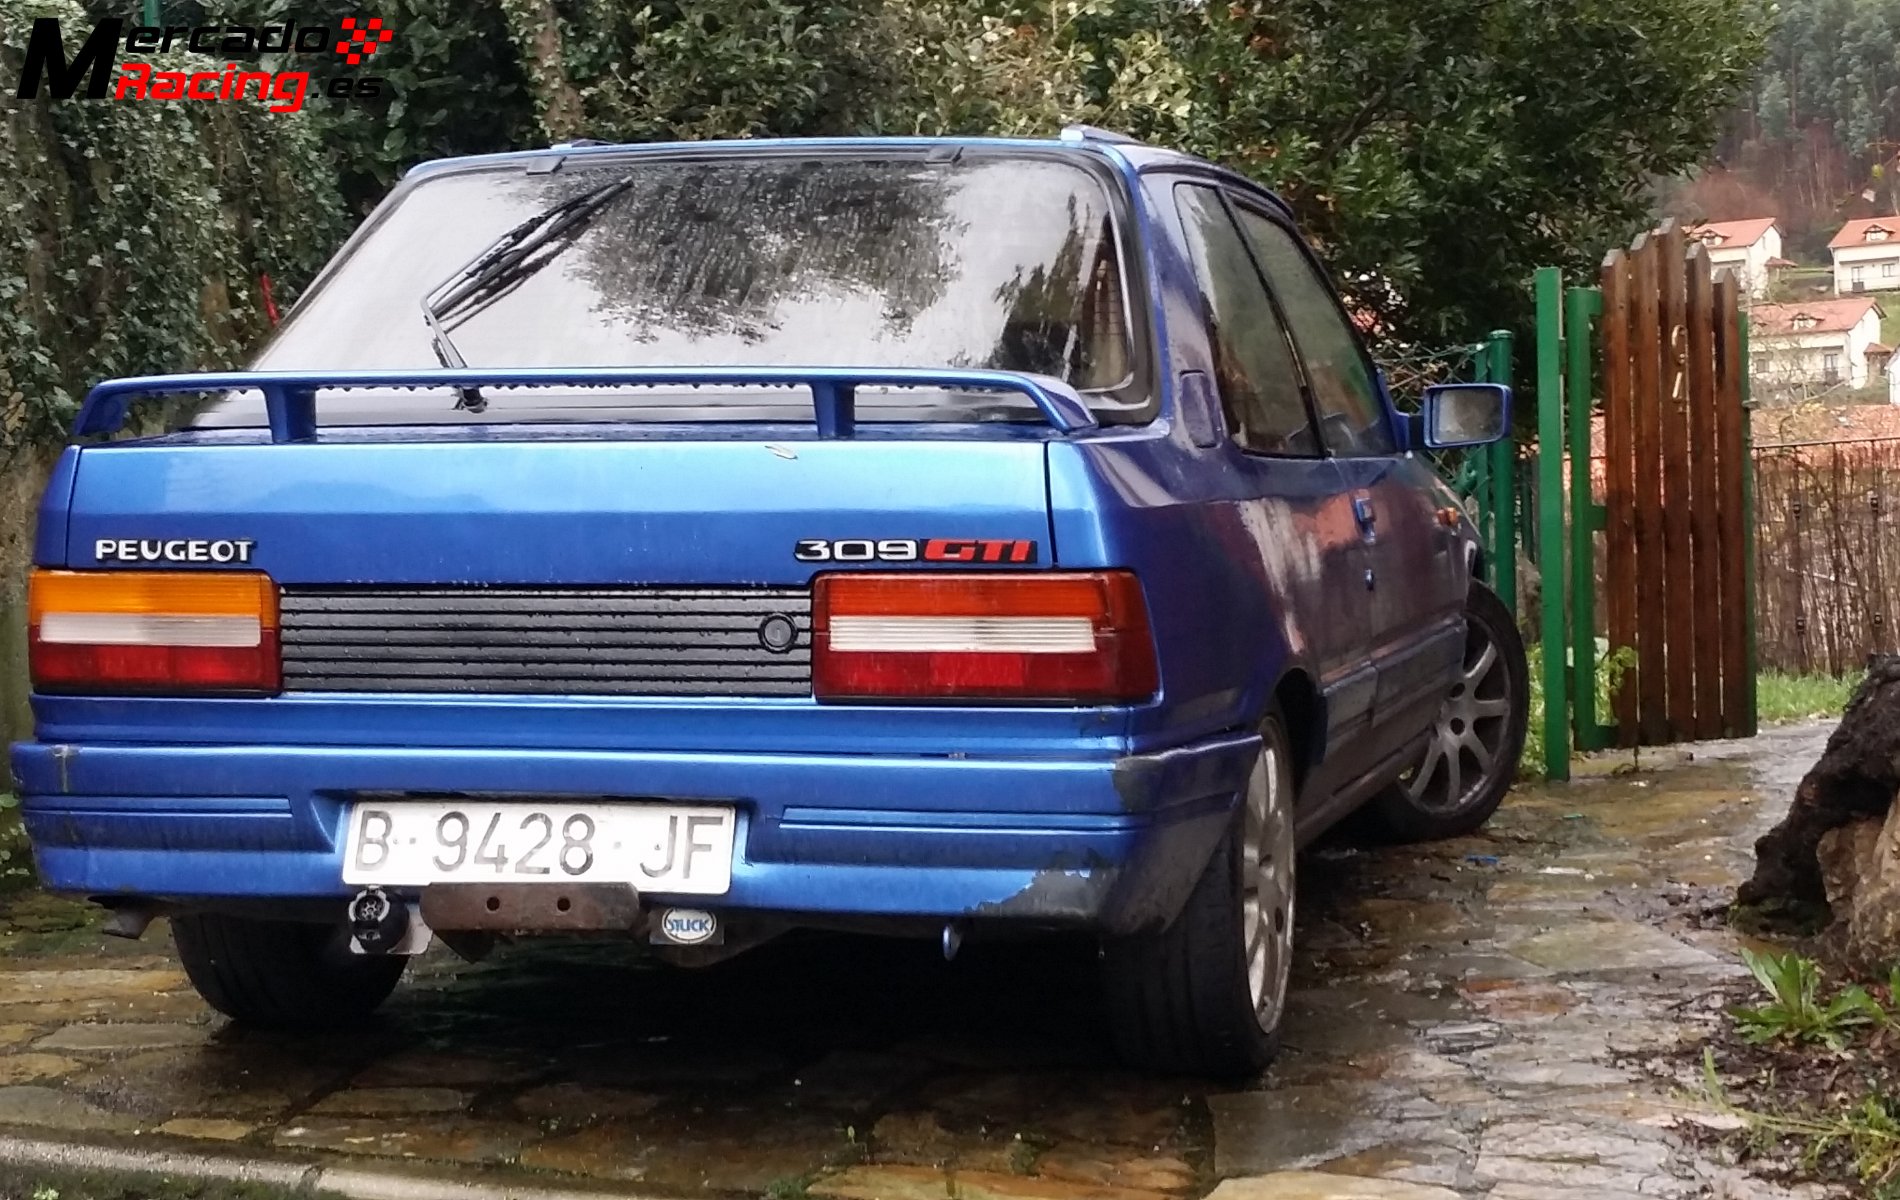 Peugeot 309 gti